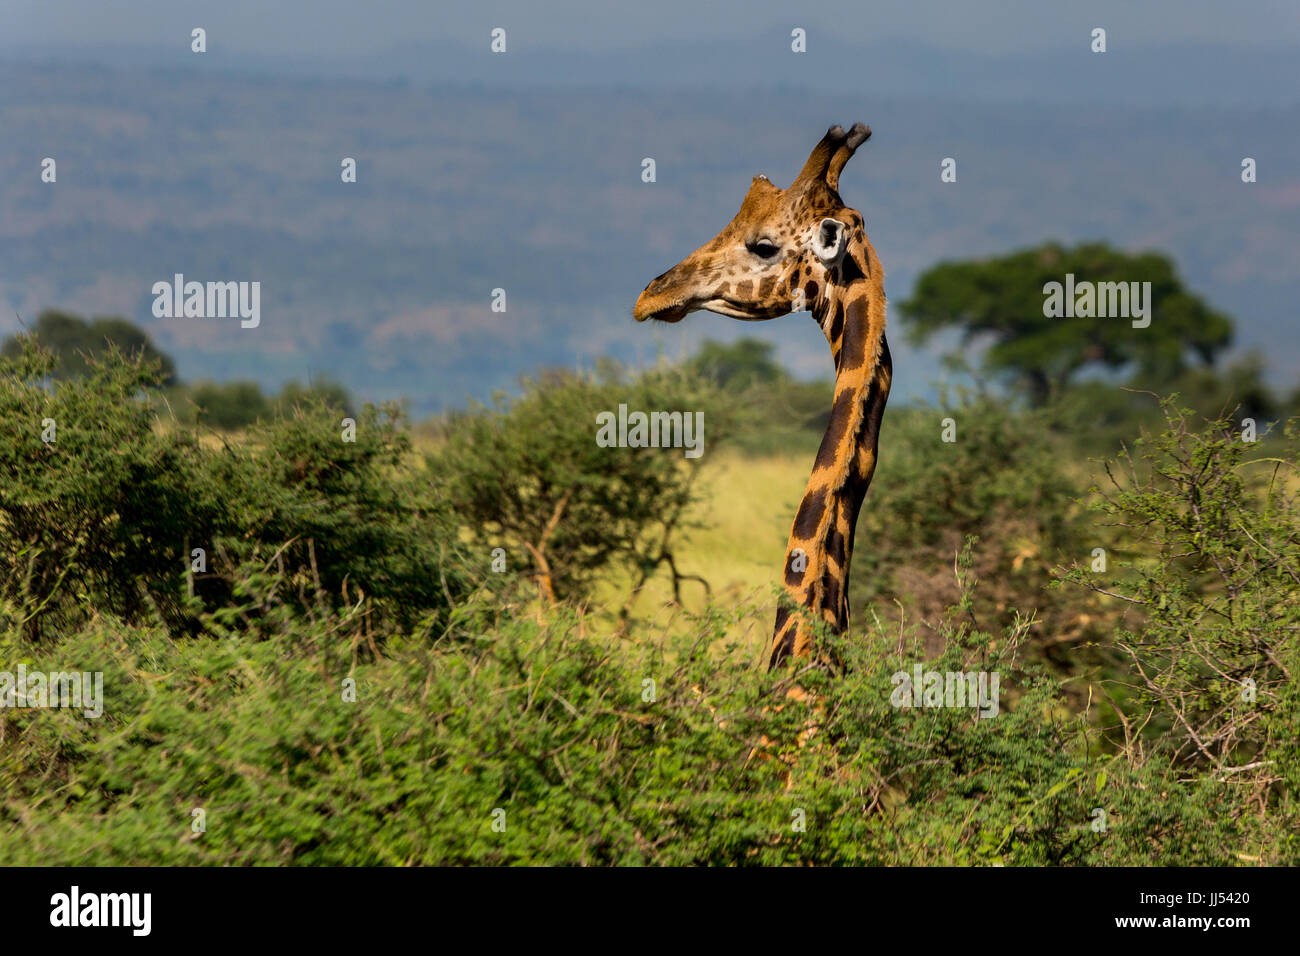 A Rothschild's Giraffe Profile in Murchison Falls National Park, Uganda Stock Photo